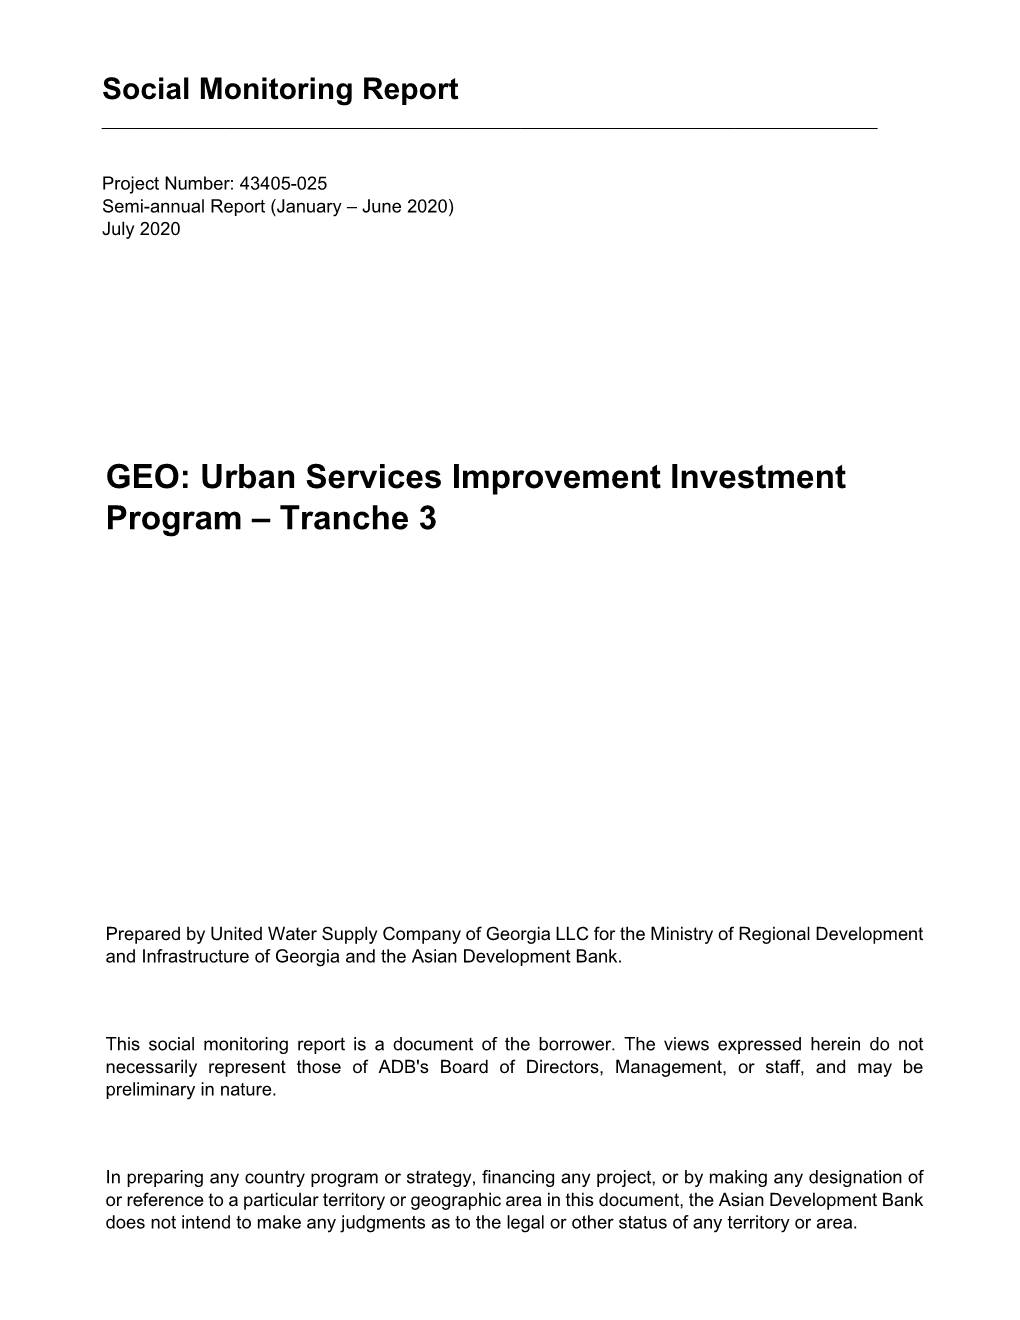 43405-025: Urban Services Improvement Investment Program